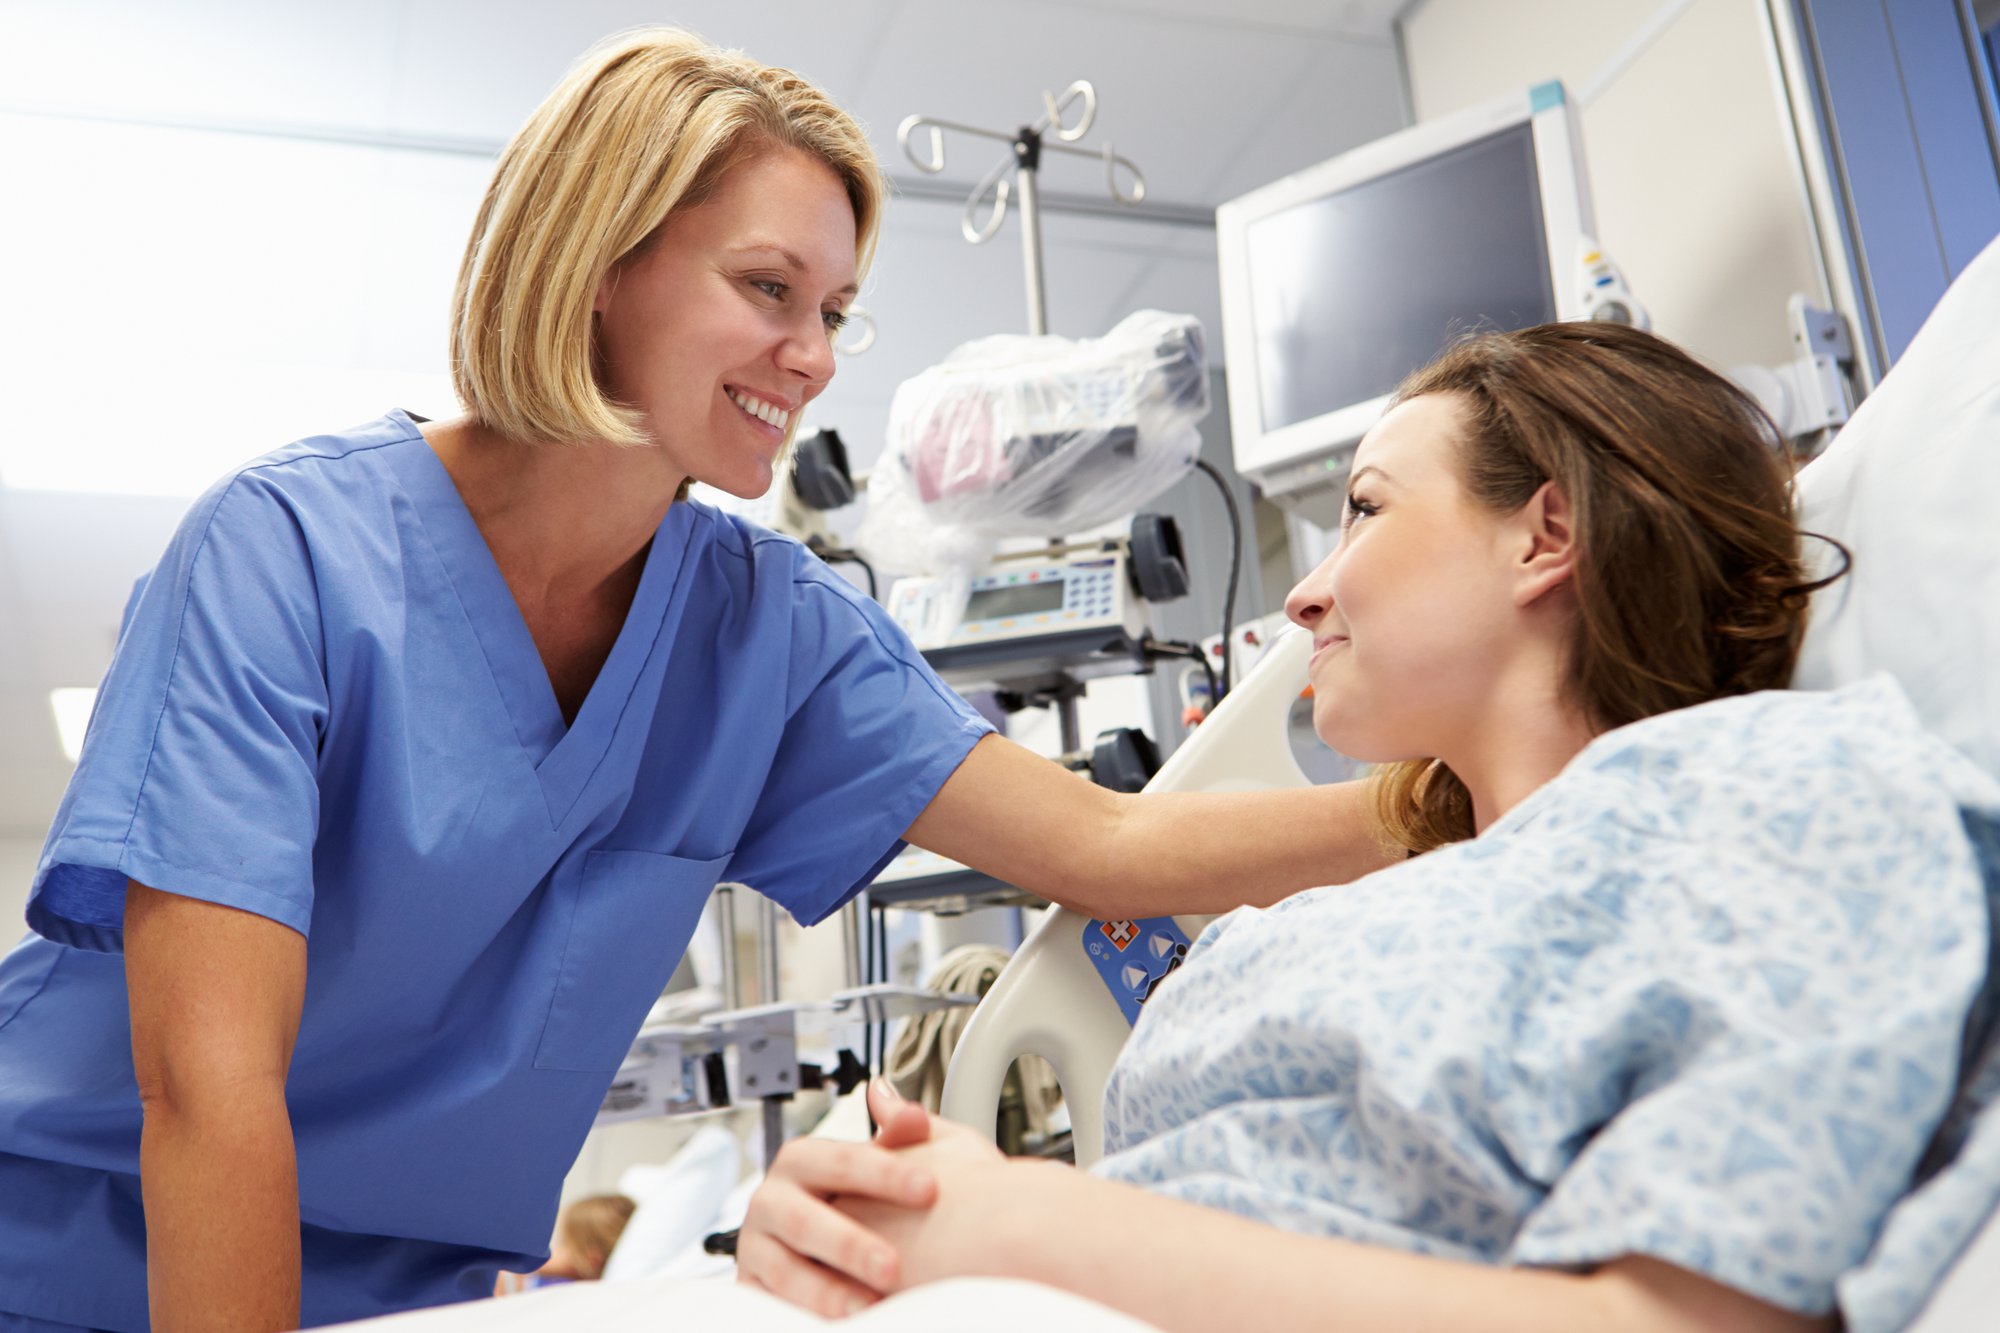 areas of improvement for nurses